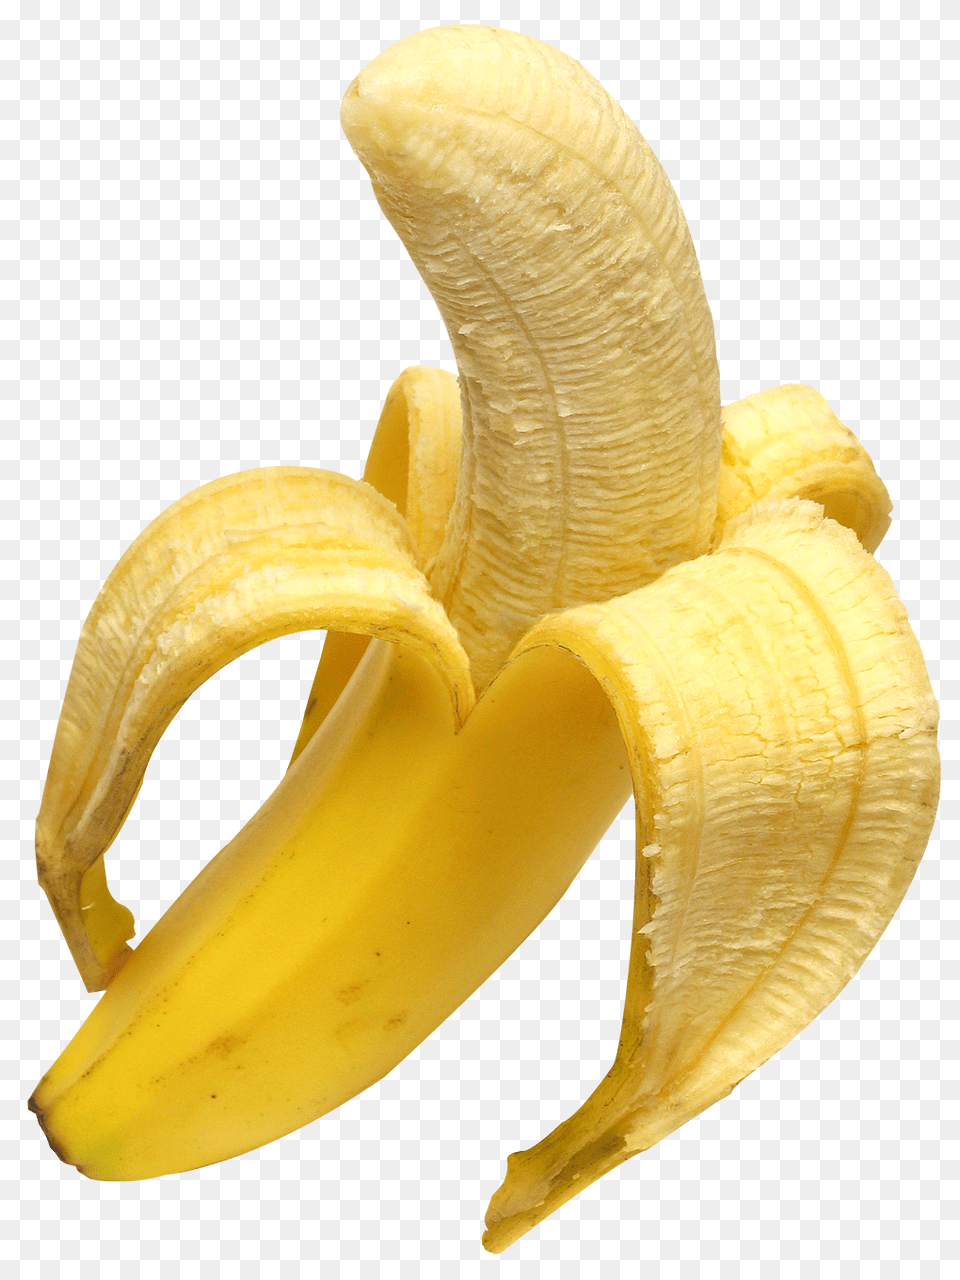 Open Banana Image, Food, Fruit, Plant, Produce Png